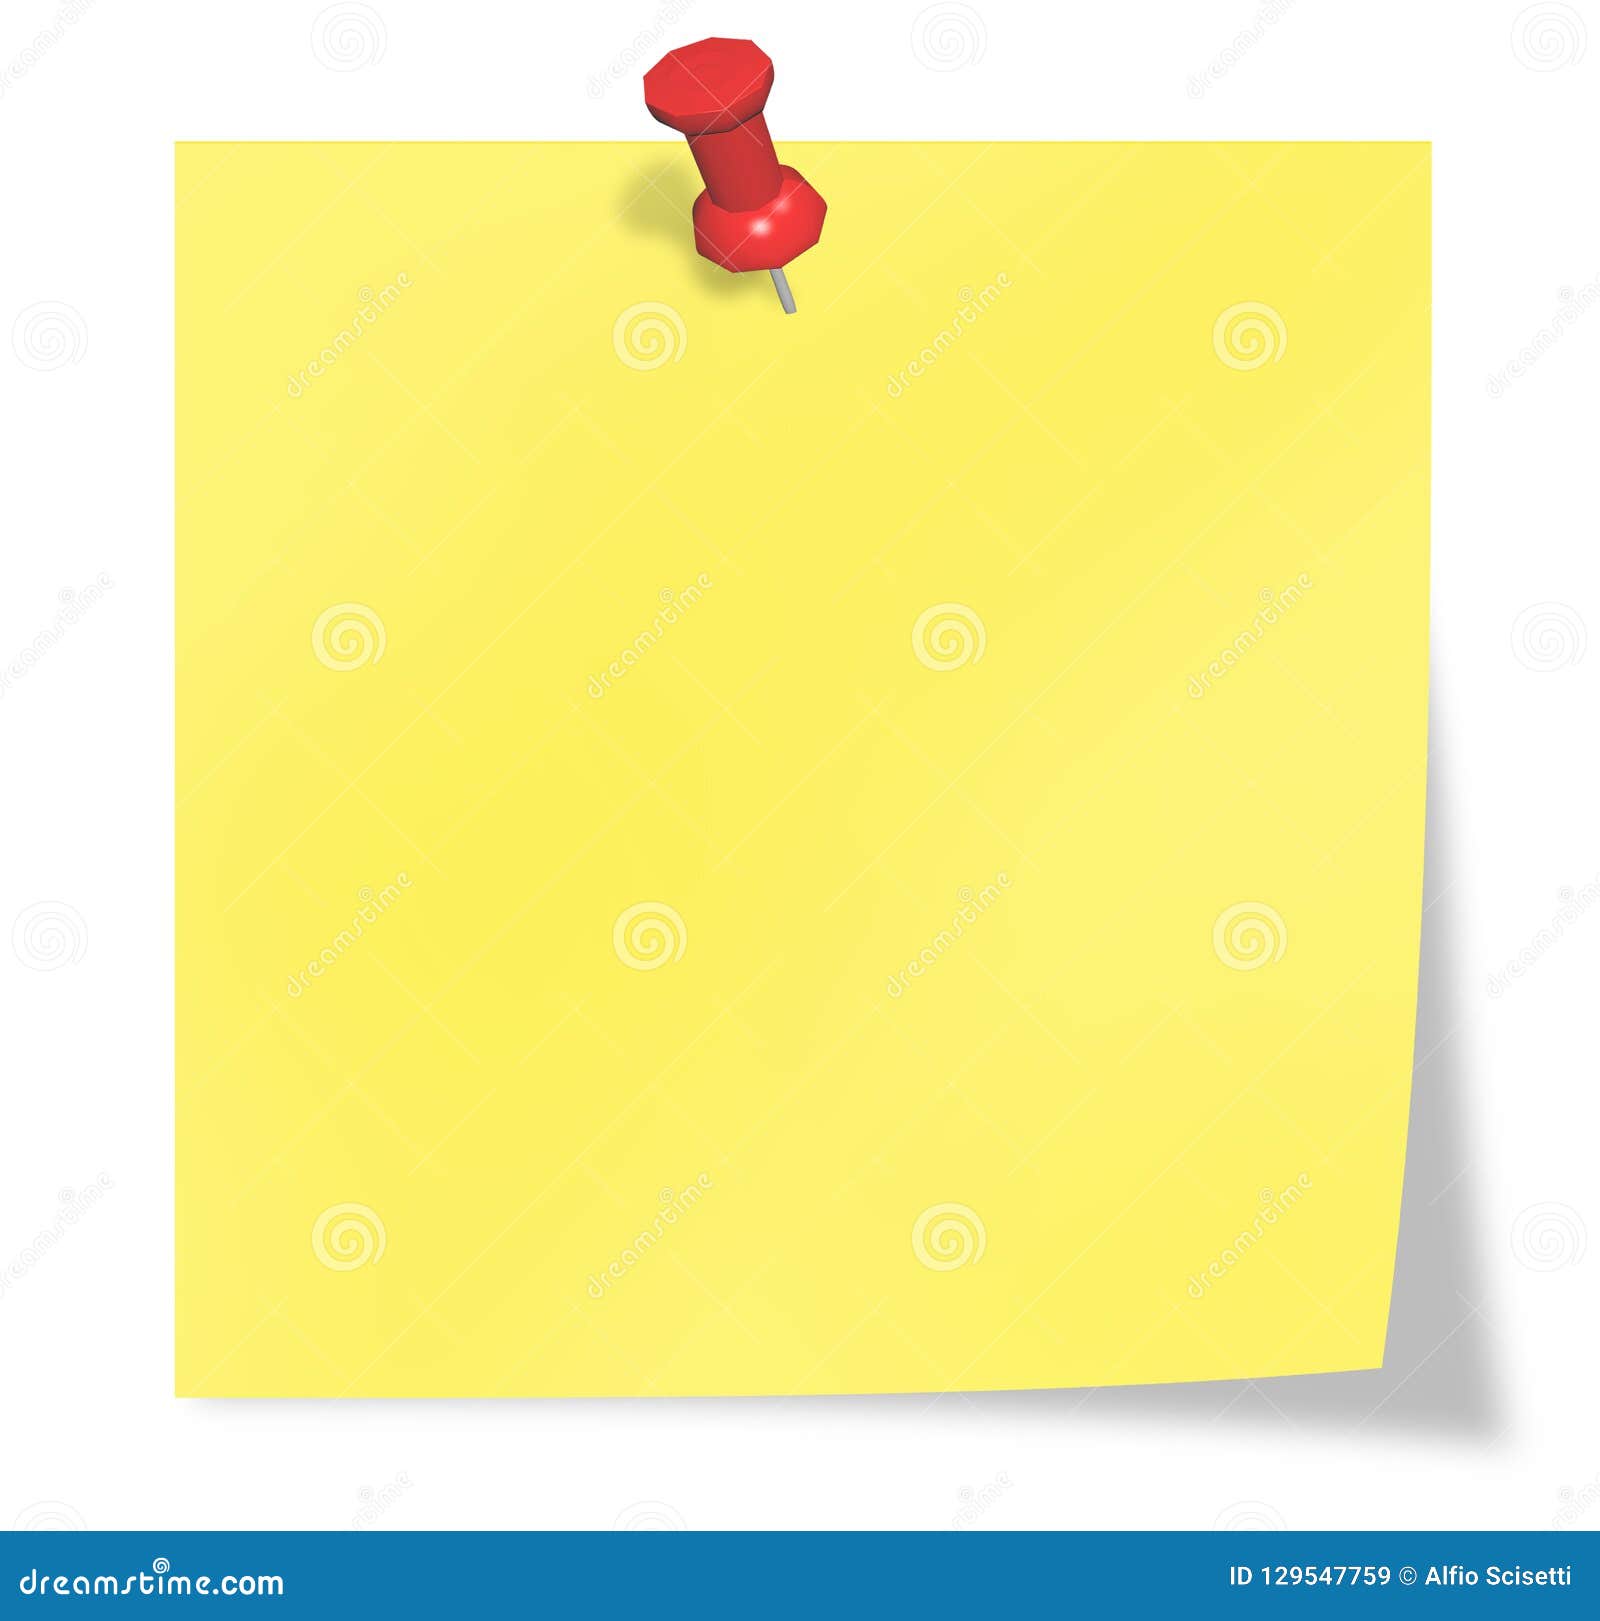 Min circulación Democracia Yellow post it stock illustration. Illustration of sheet - 129547759